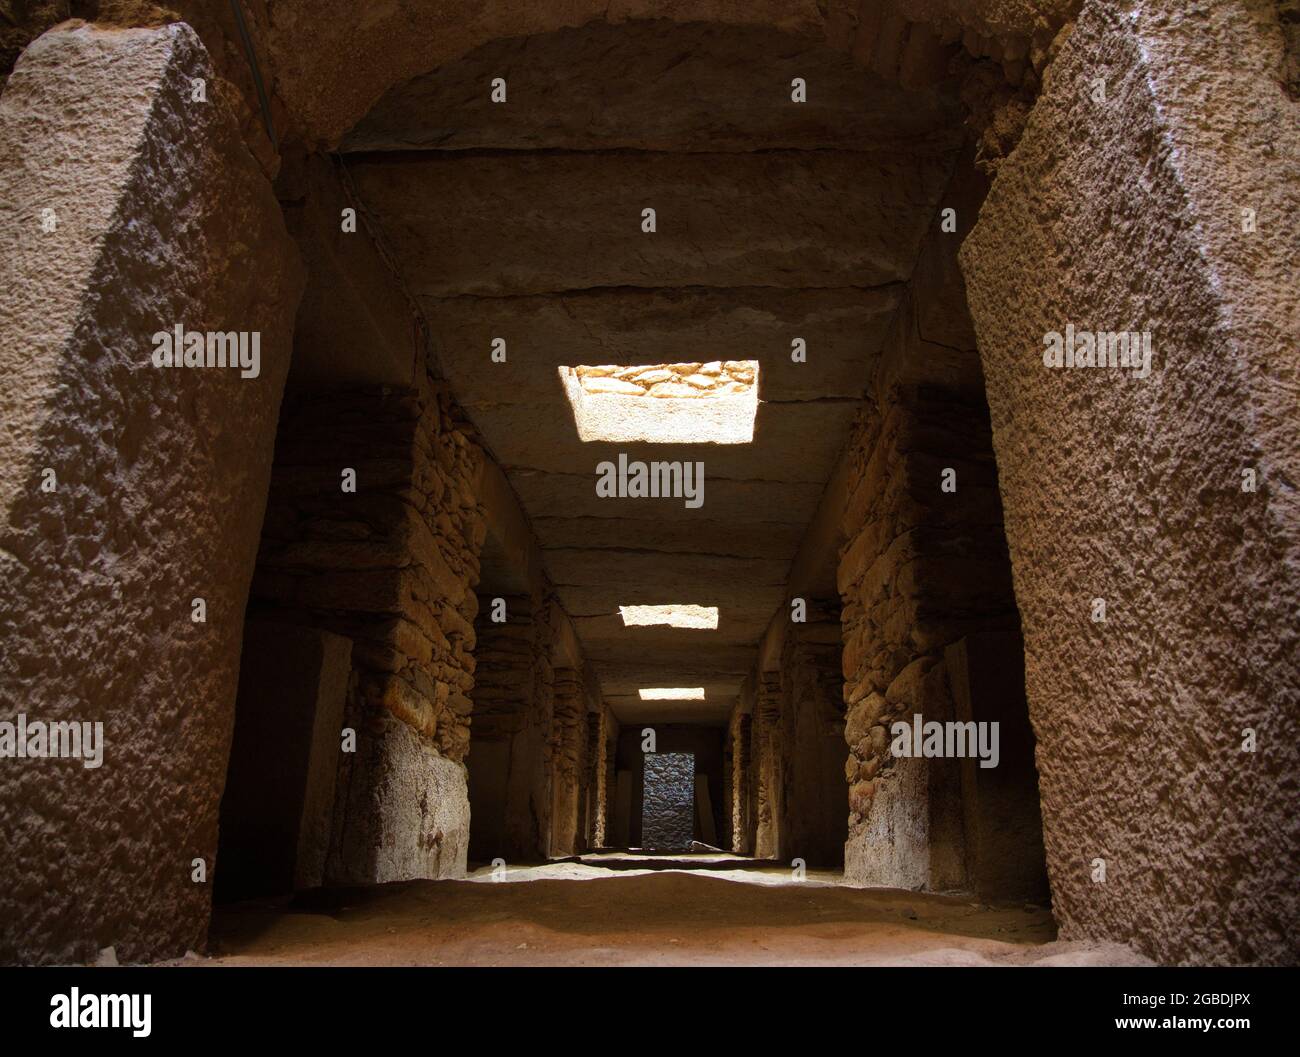 Underground portrait of King Ezana’s Stele in ancient city of Aksum, Ethiopia. Stock Photo